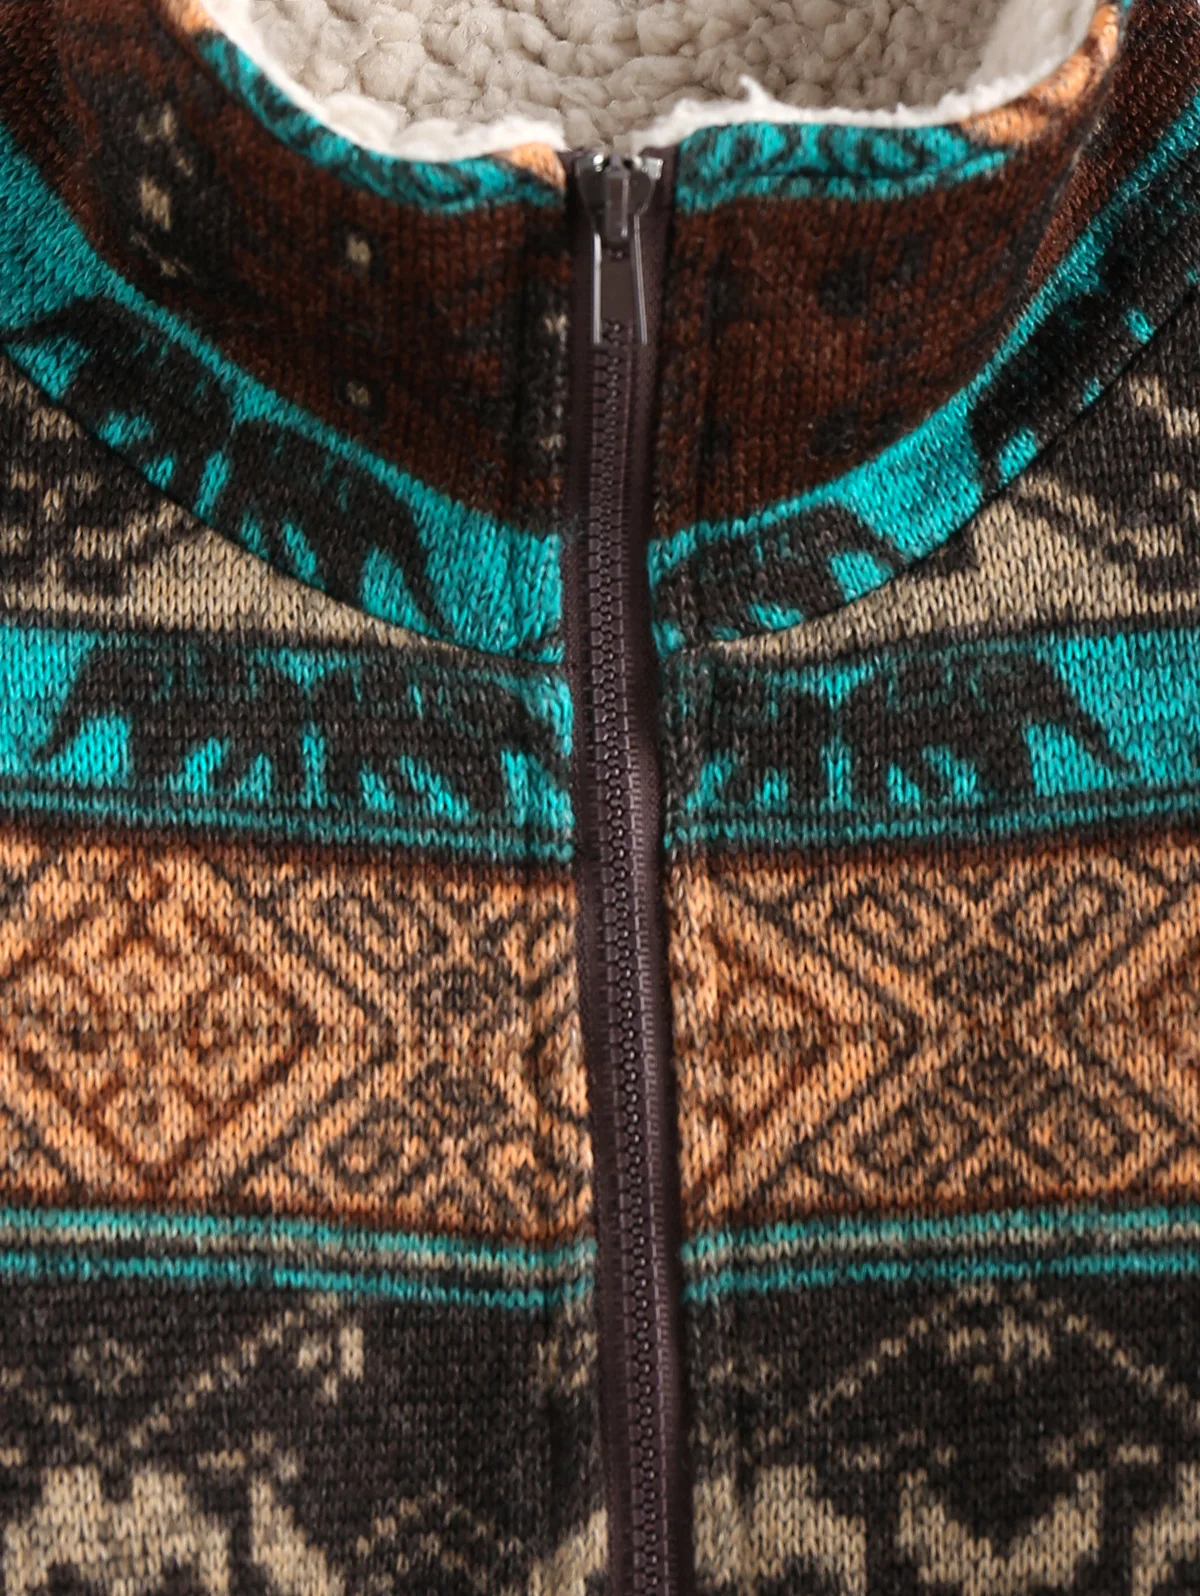  ZAFUL Tribal Print Plaid Faux Fur Lined Jacket Women High Waist Hoodies Sweatshirts Autumn Spring V